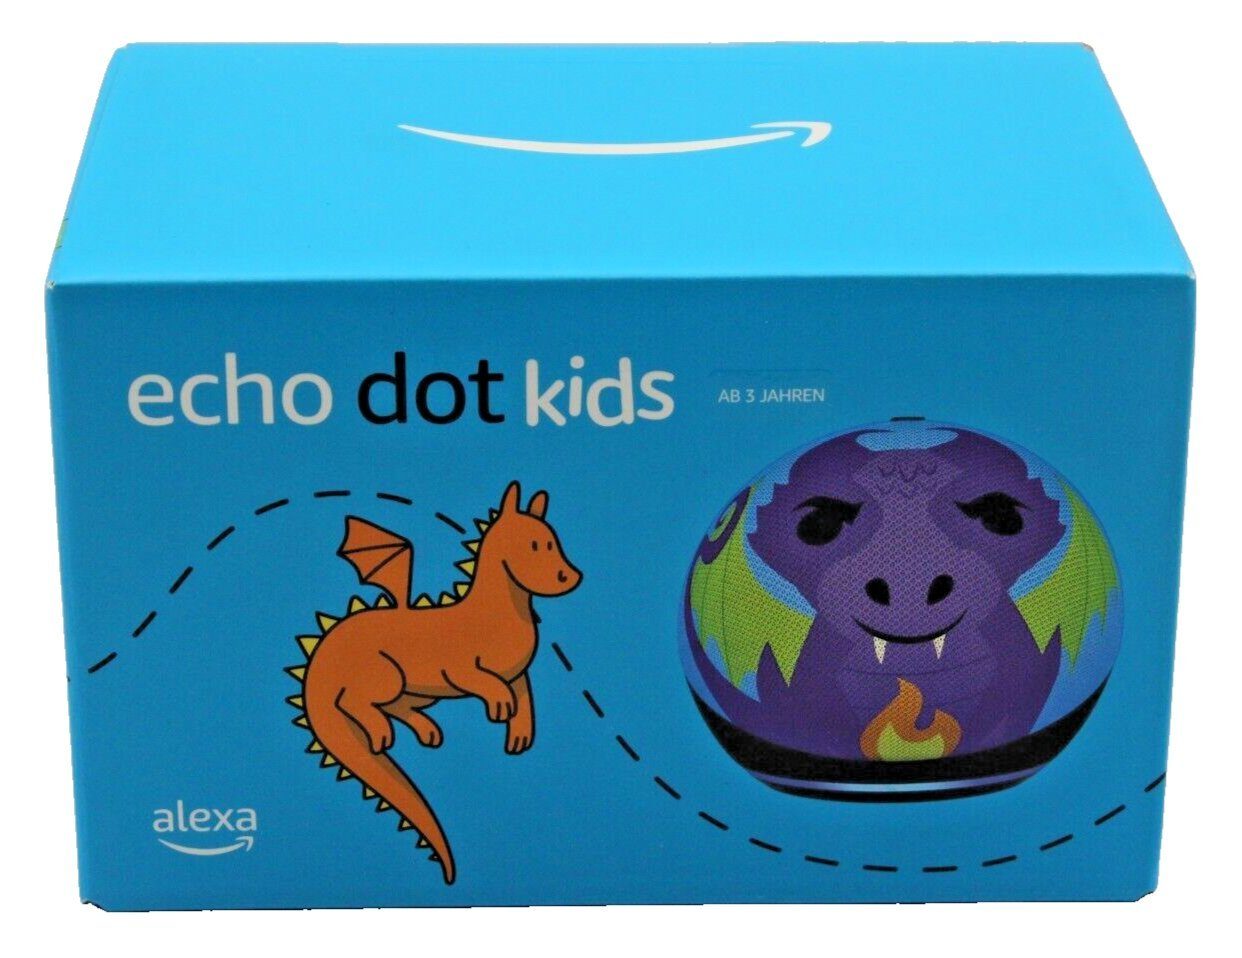 Echo Drachen-Design 5. 2022 Design Speaker (Bluetooth, Dot Kids Drachen hervorragende Alexa, (WiFi), Klangqualität, Kindergerecht) Lautsprecher WLAN Generation Smart Amazon